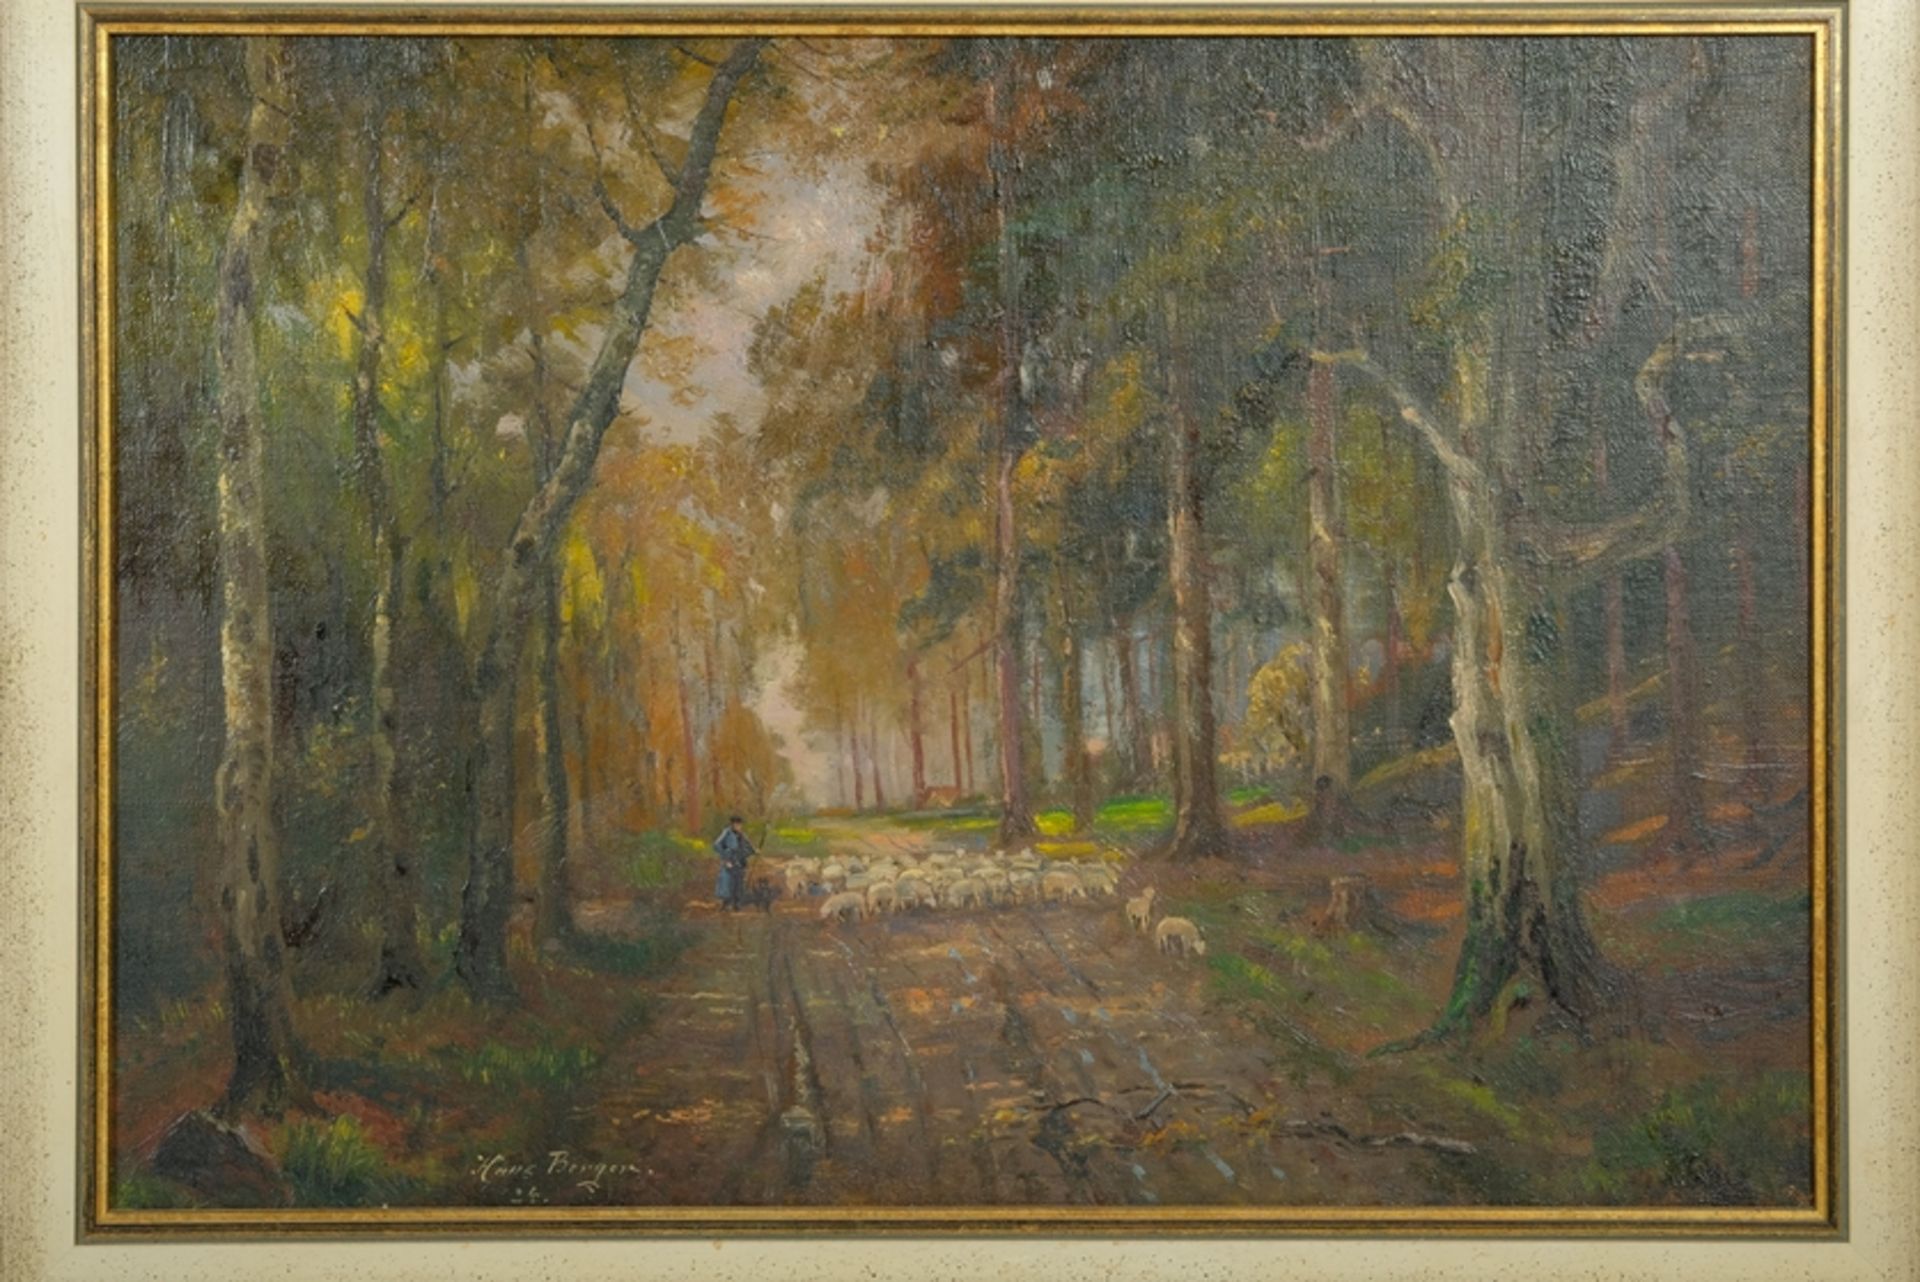 Berger, Hans (1882-1977) Schäferszene im Wald, Öl auf Leinwand / kartoniert, 1924. 